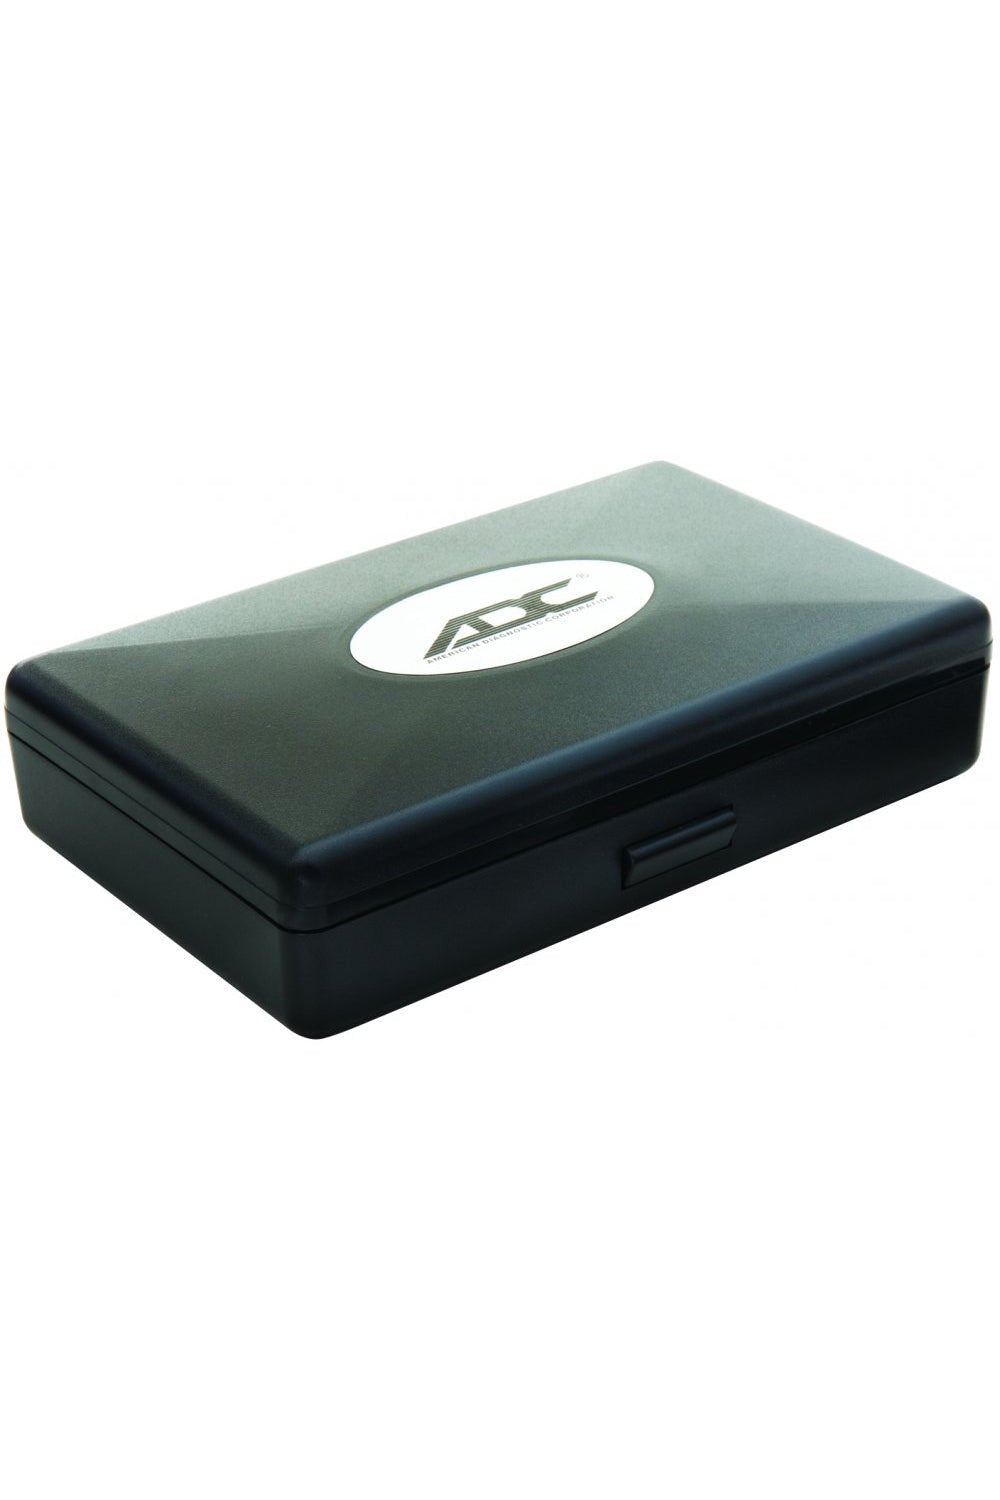 ADC Diagnostix™ Pocket Diagnostic Set - Pocket Otoscope/Ophthalmoscope - Black - 5110N